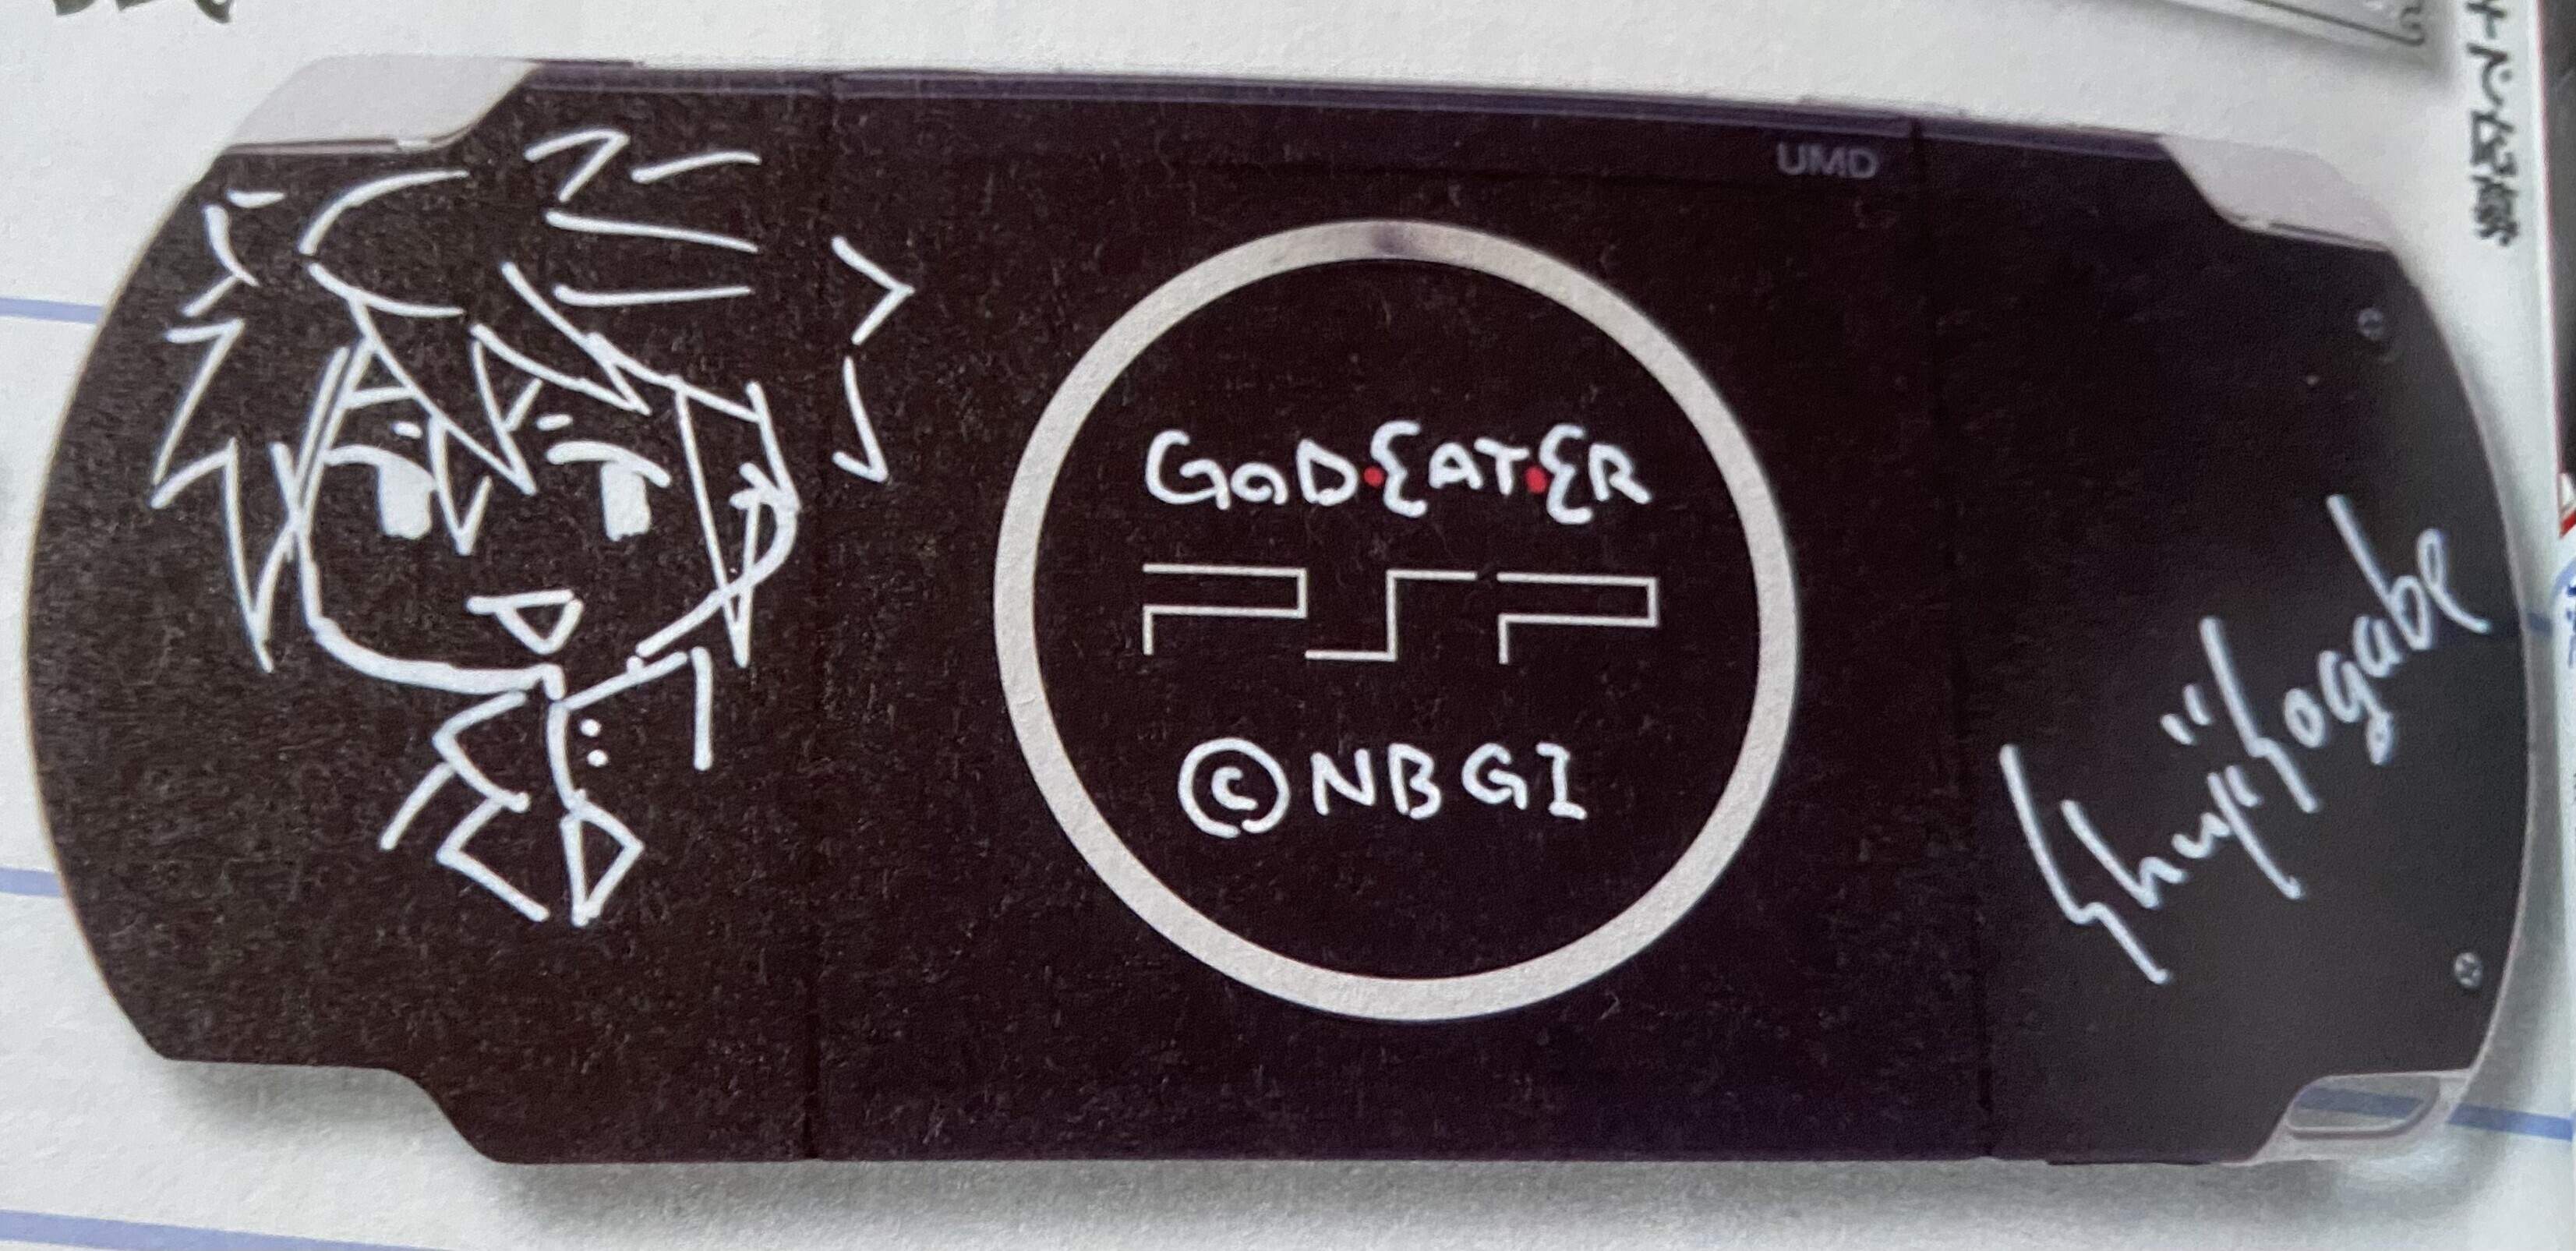  Sony PSP 3000 God Eater Console